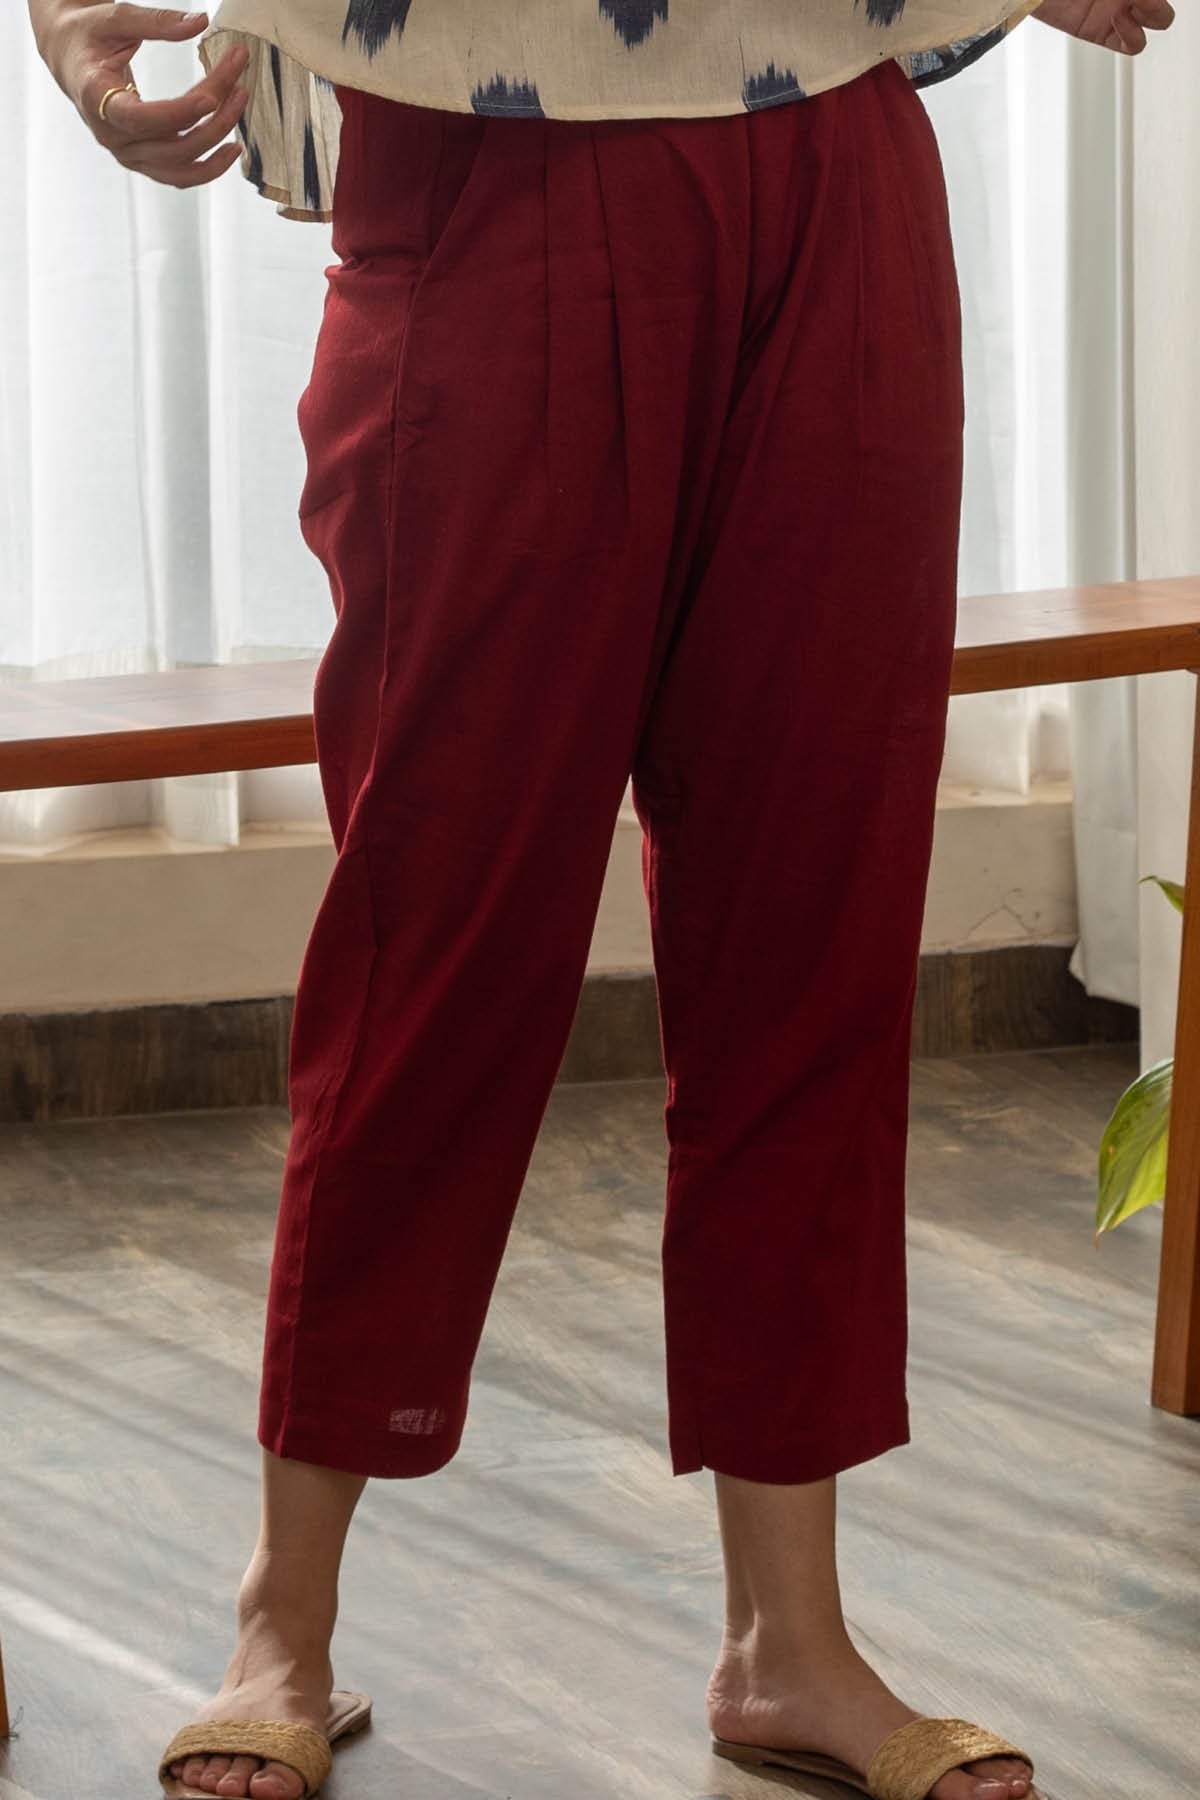 Della Handloom Ikat Top and Maroon Pleated Pants - Set